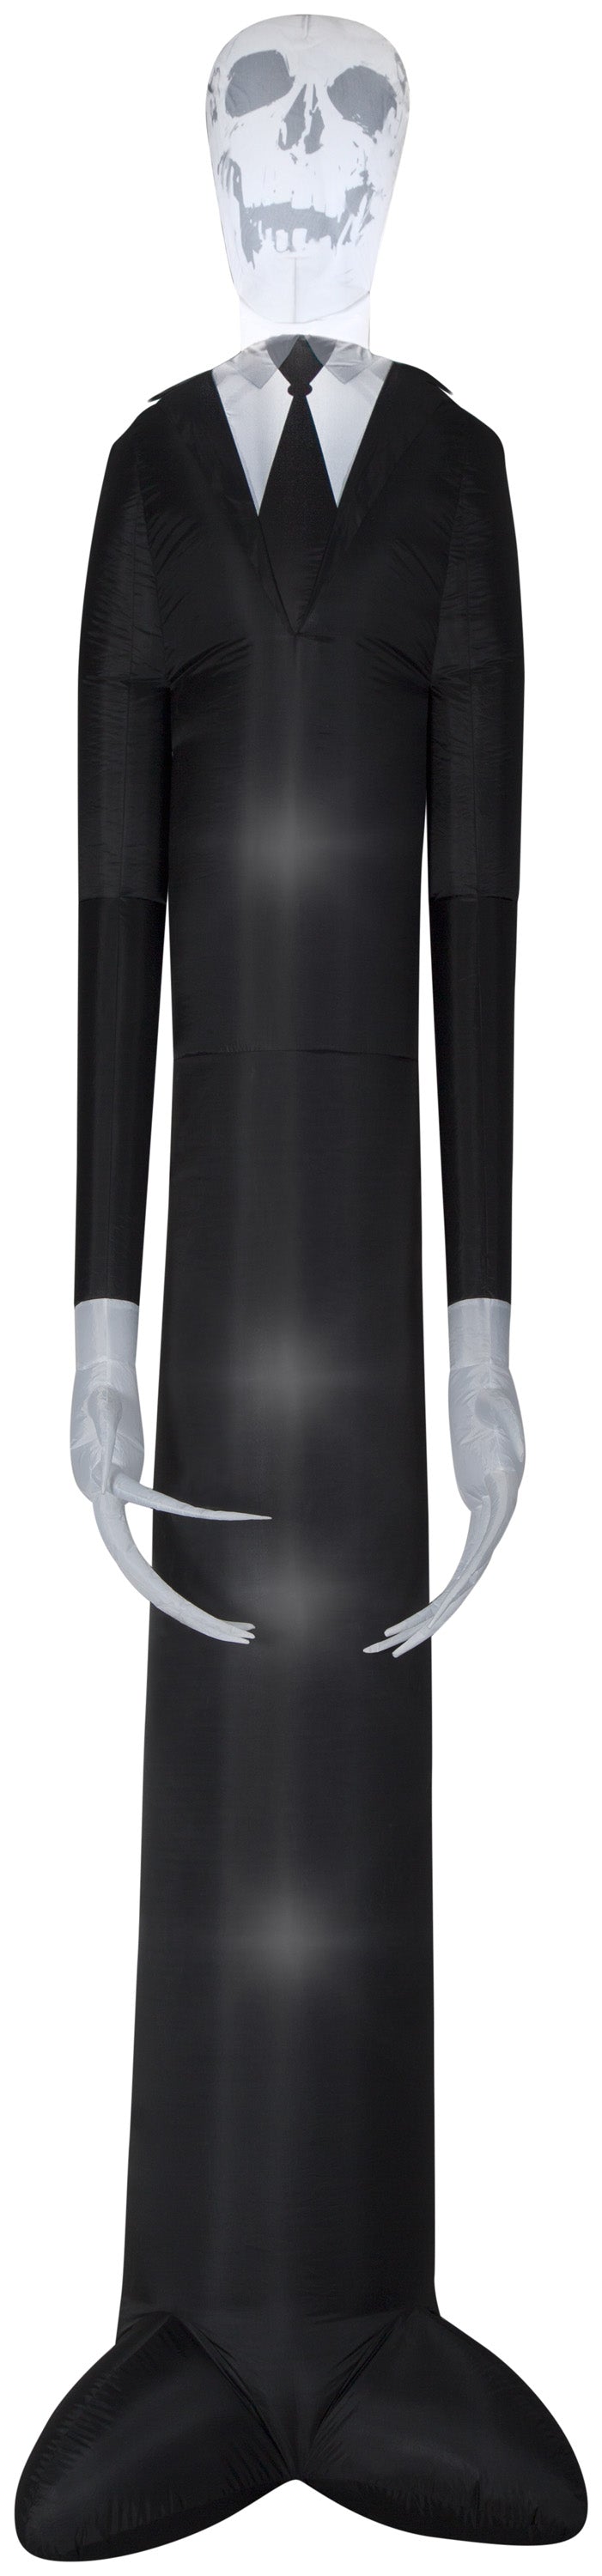 12' Airblown ShortCircuit Slim Man Halloween Inflatable